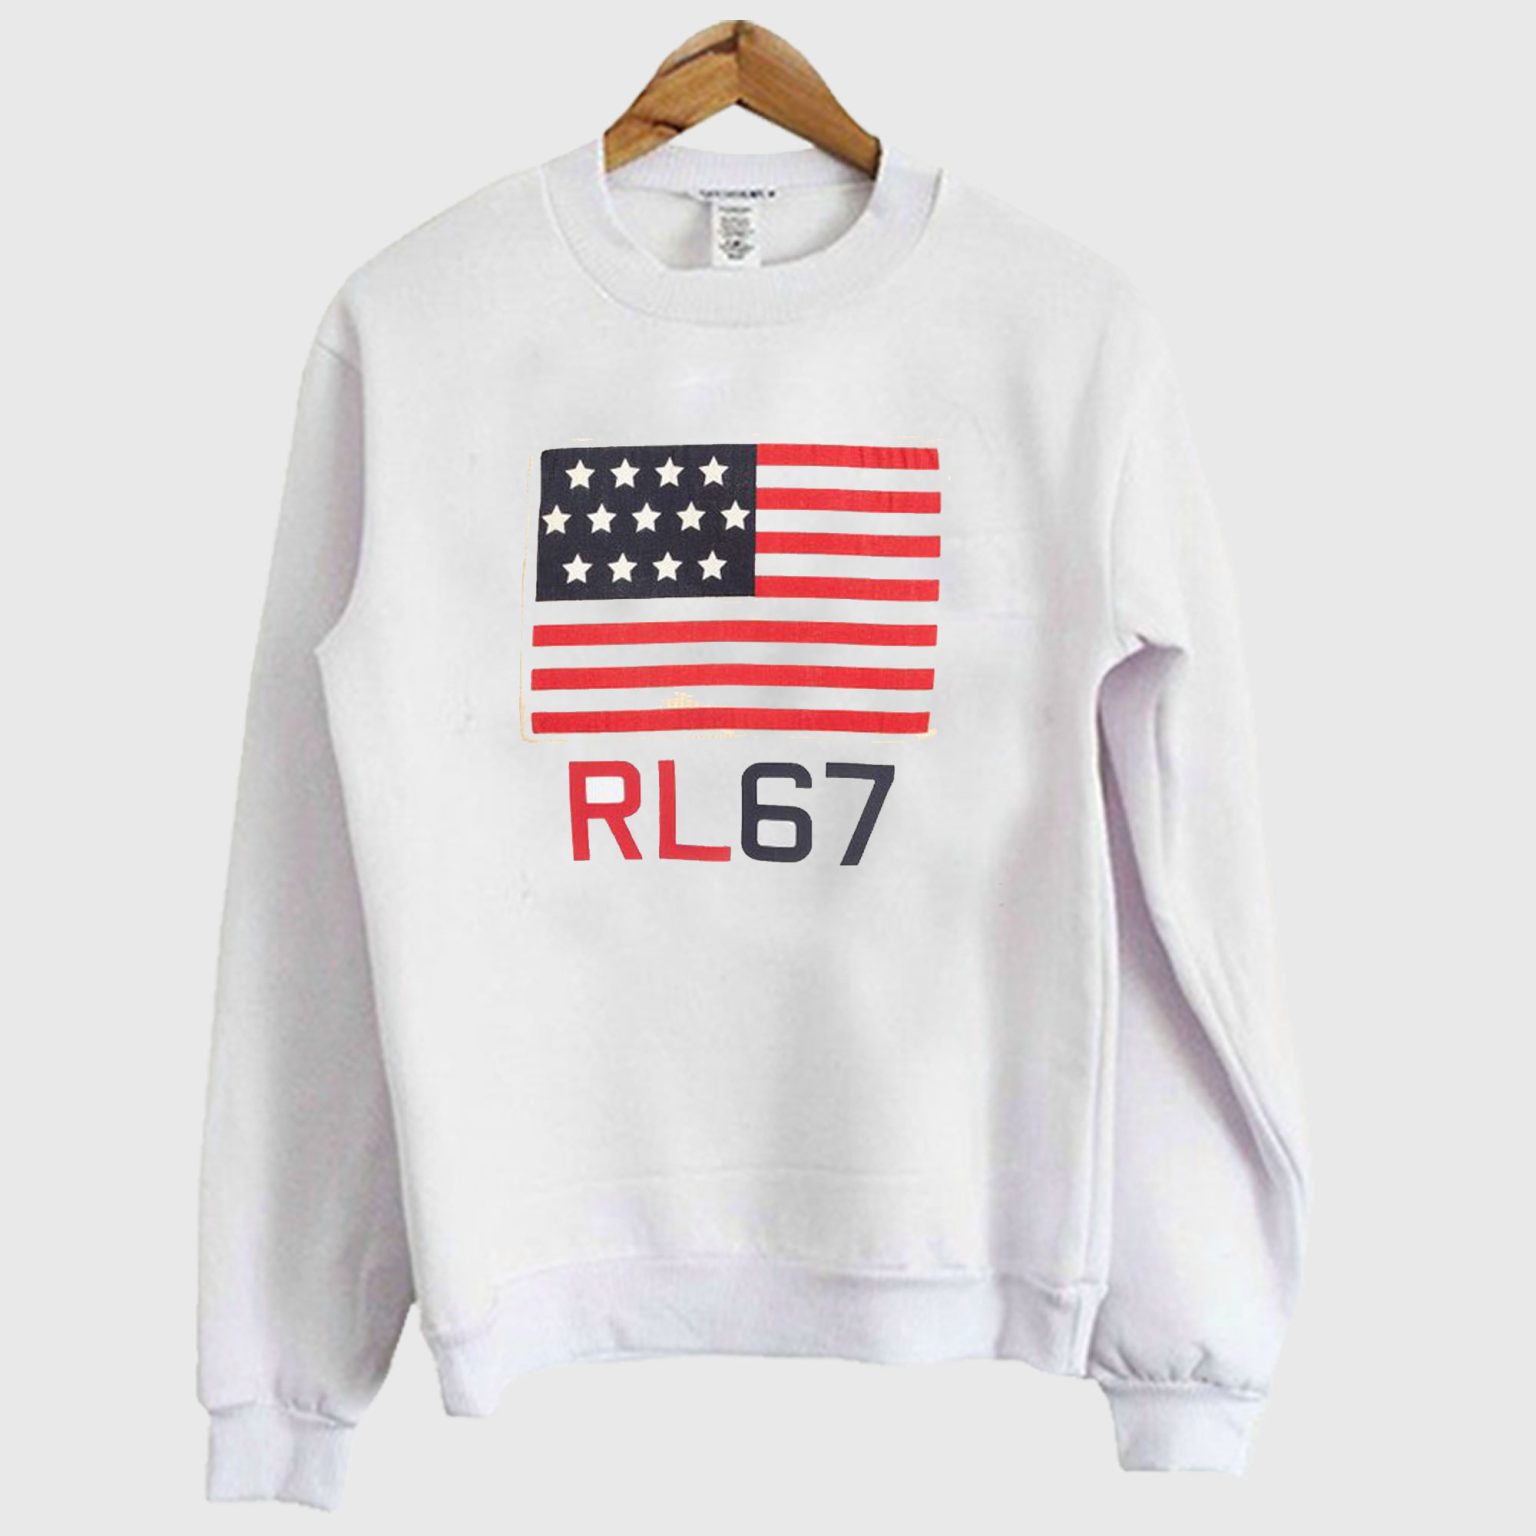 Polo Ralph Lauren – Boys White Sweatshirt